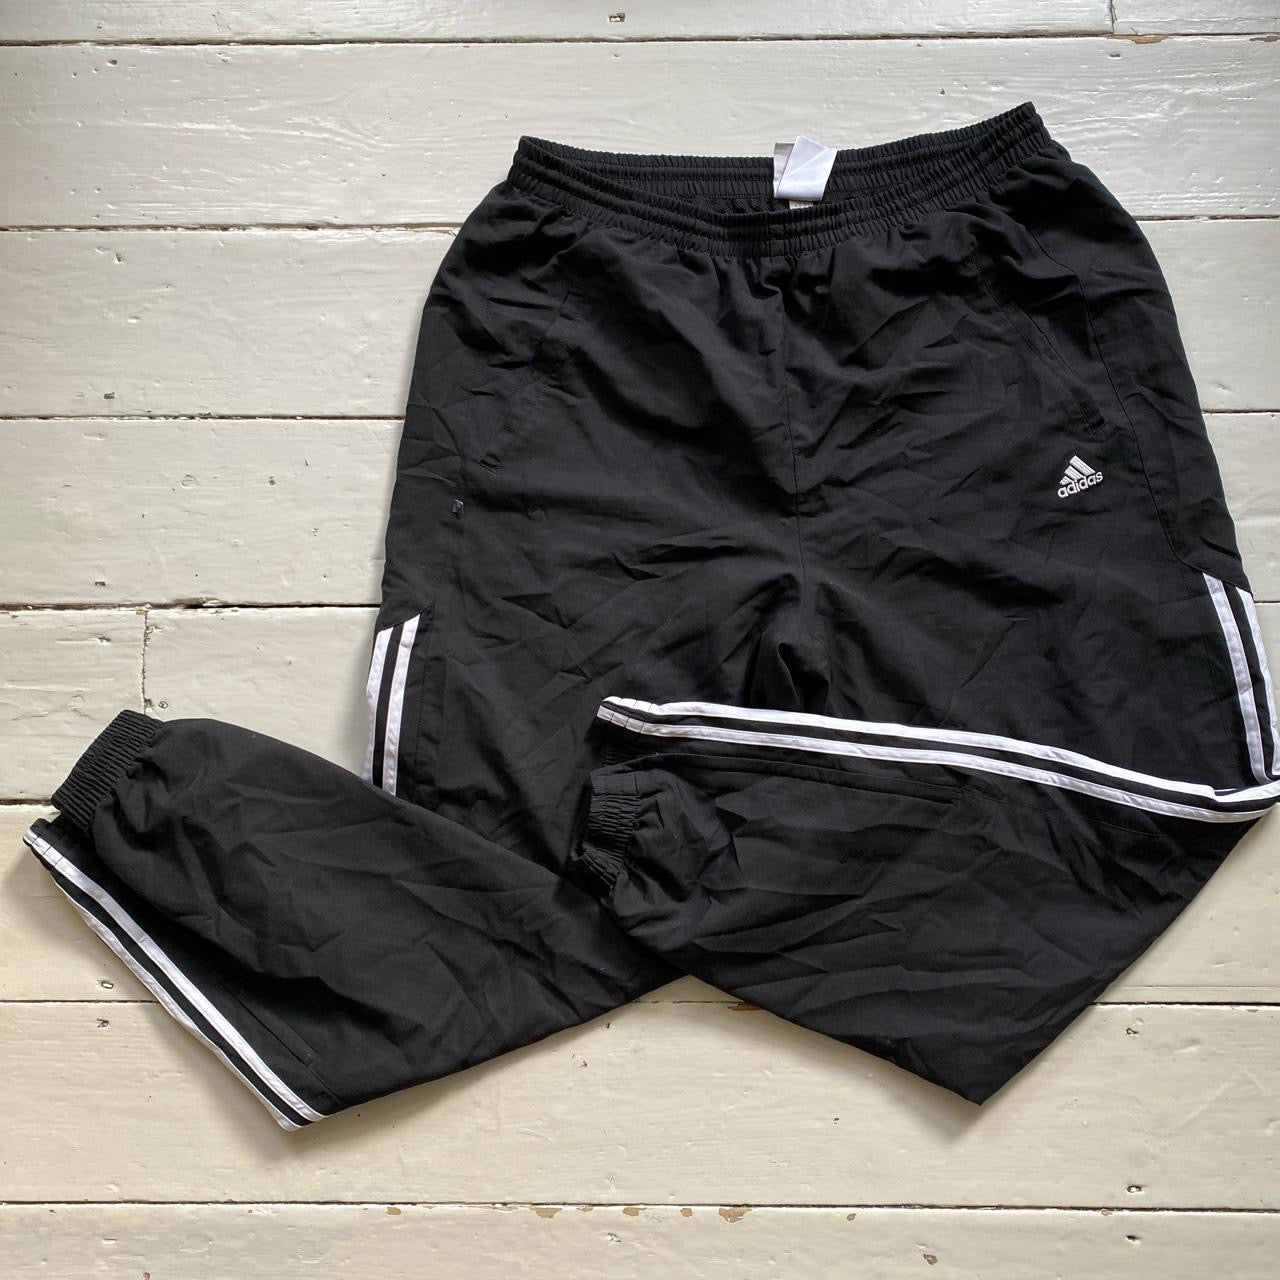 Adidas Black and White Shell Bottoms (XXL)